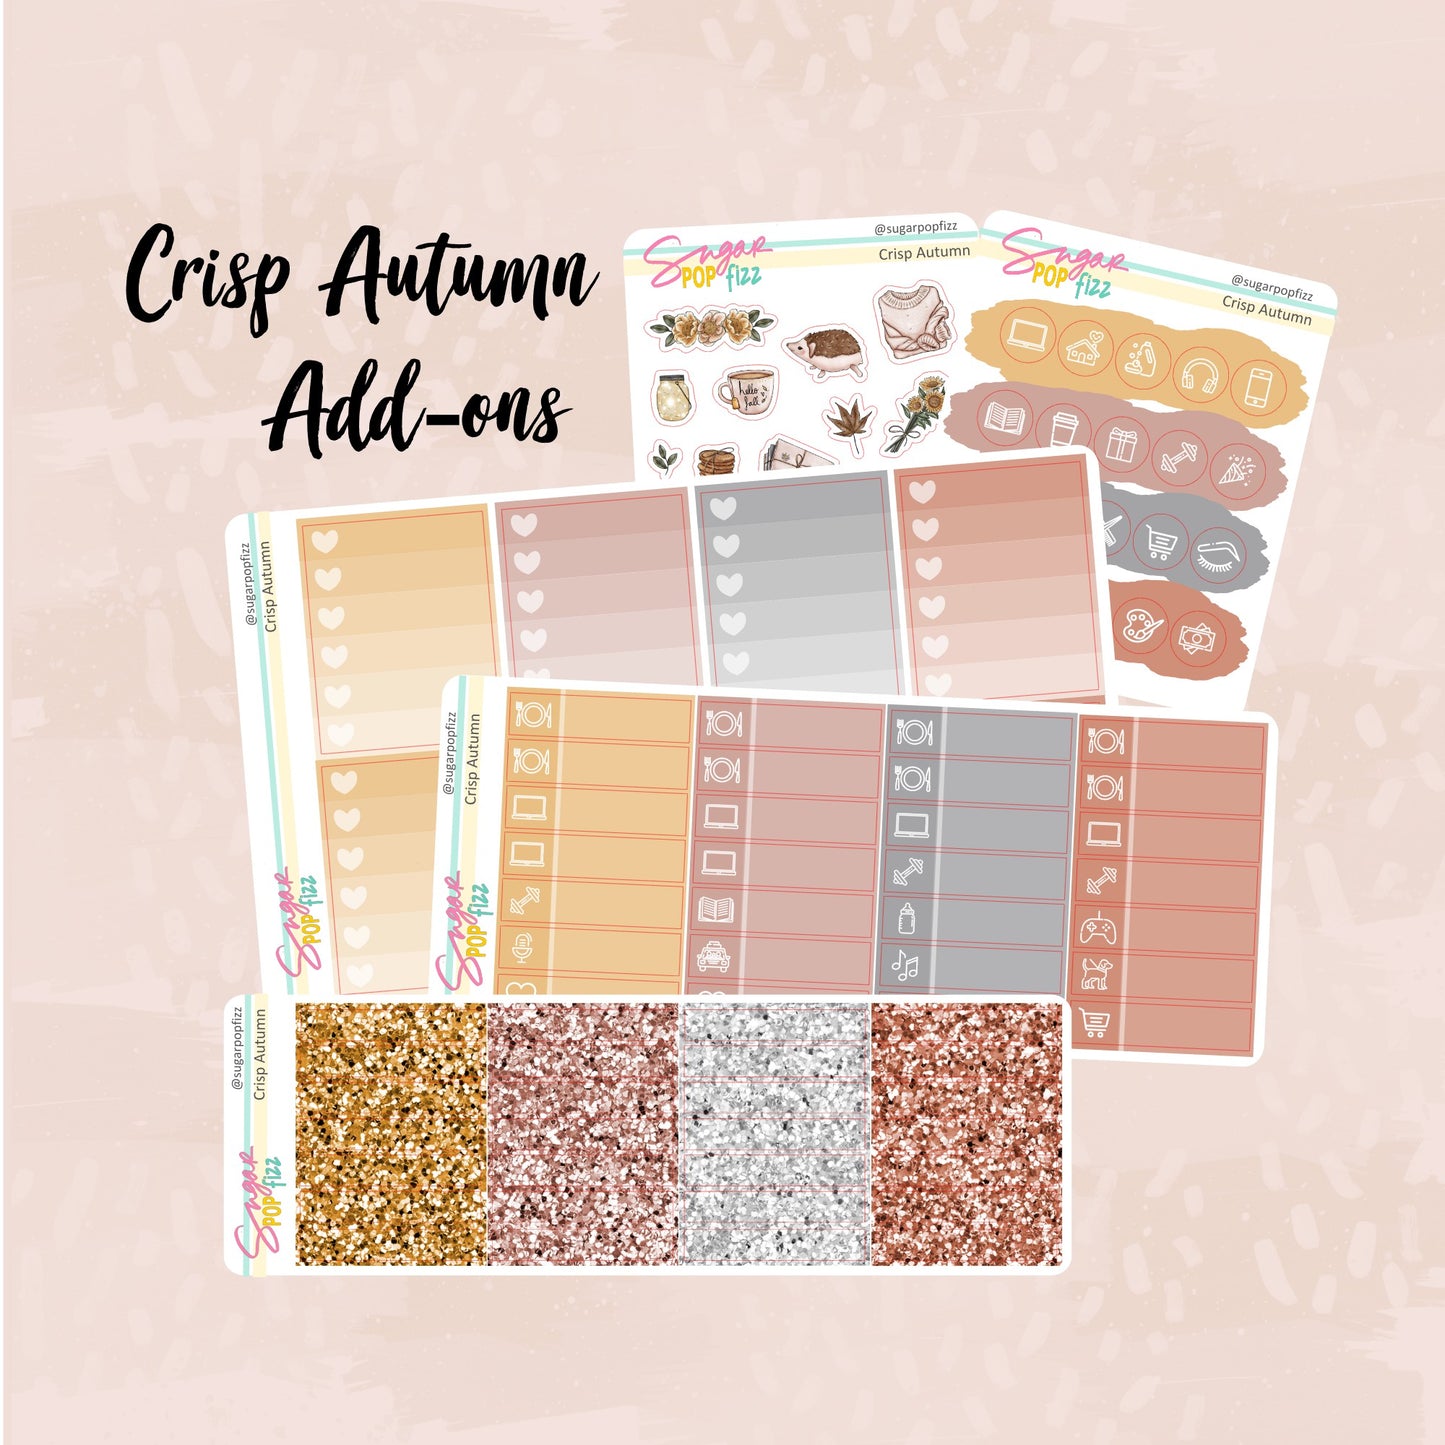 Crisp Autumn Weekly Kit Add-ons